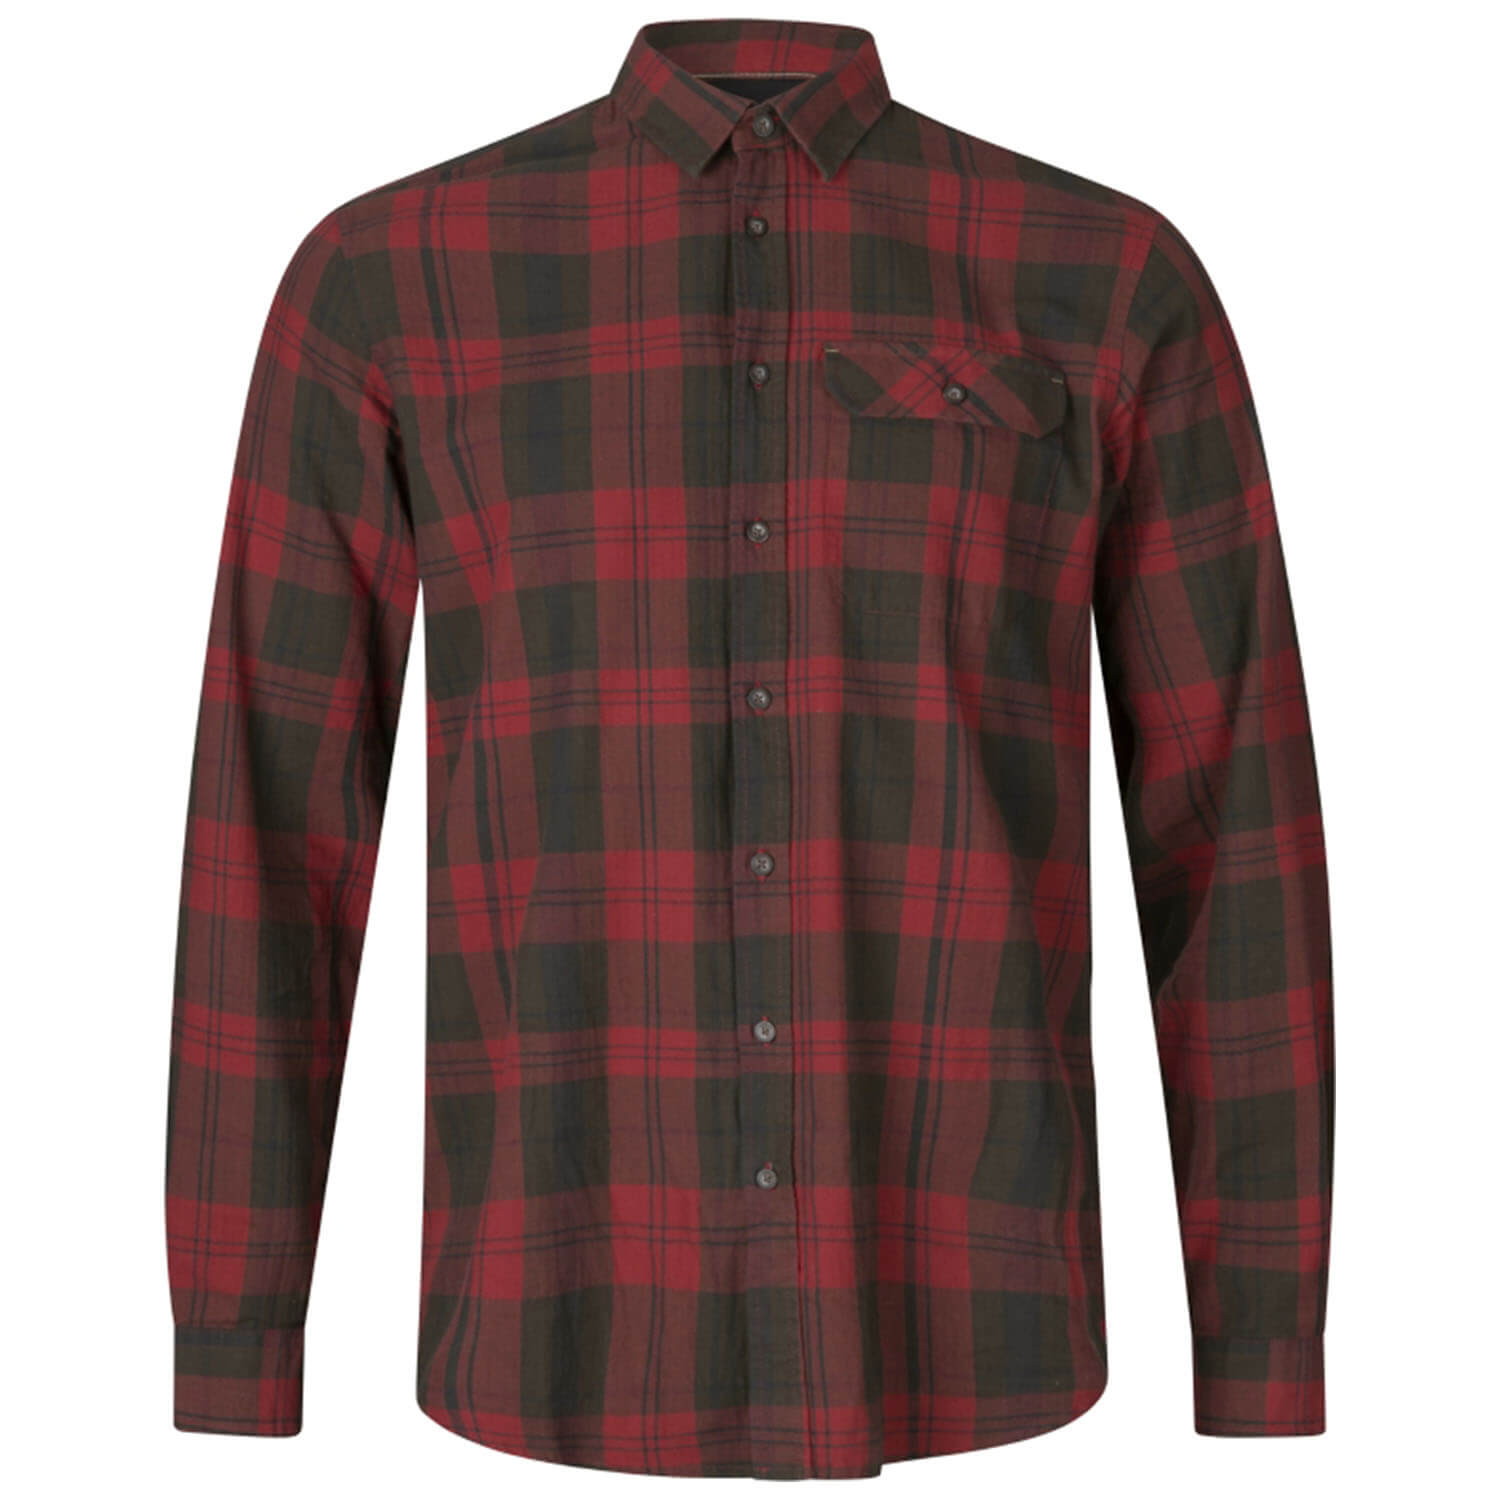  Seeland Jachthemd Highseat (Rode Woudruit) - Overhemden & shirts